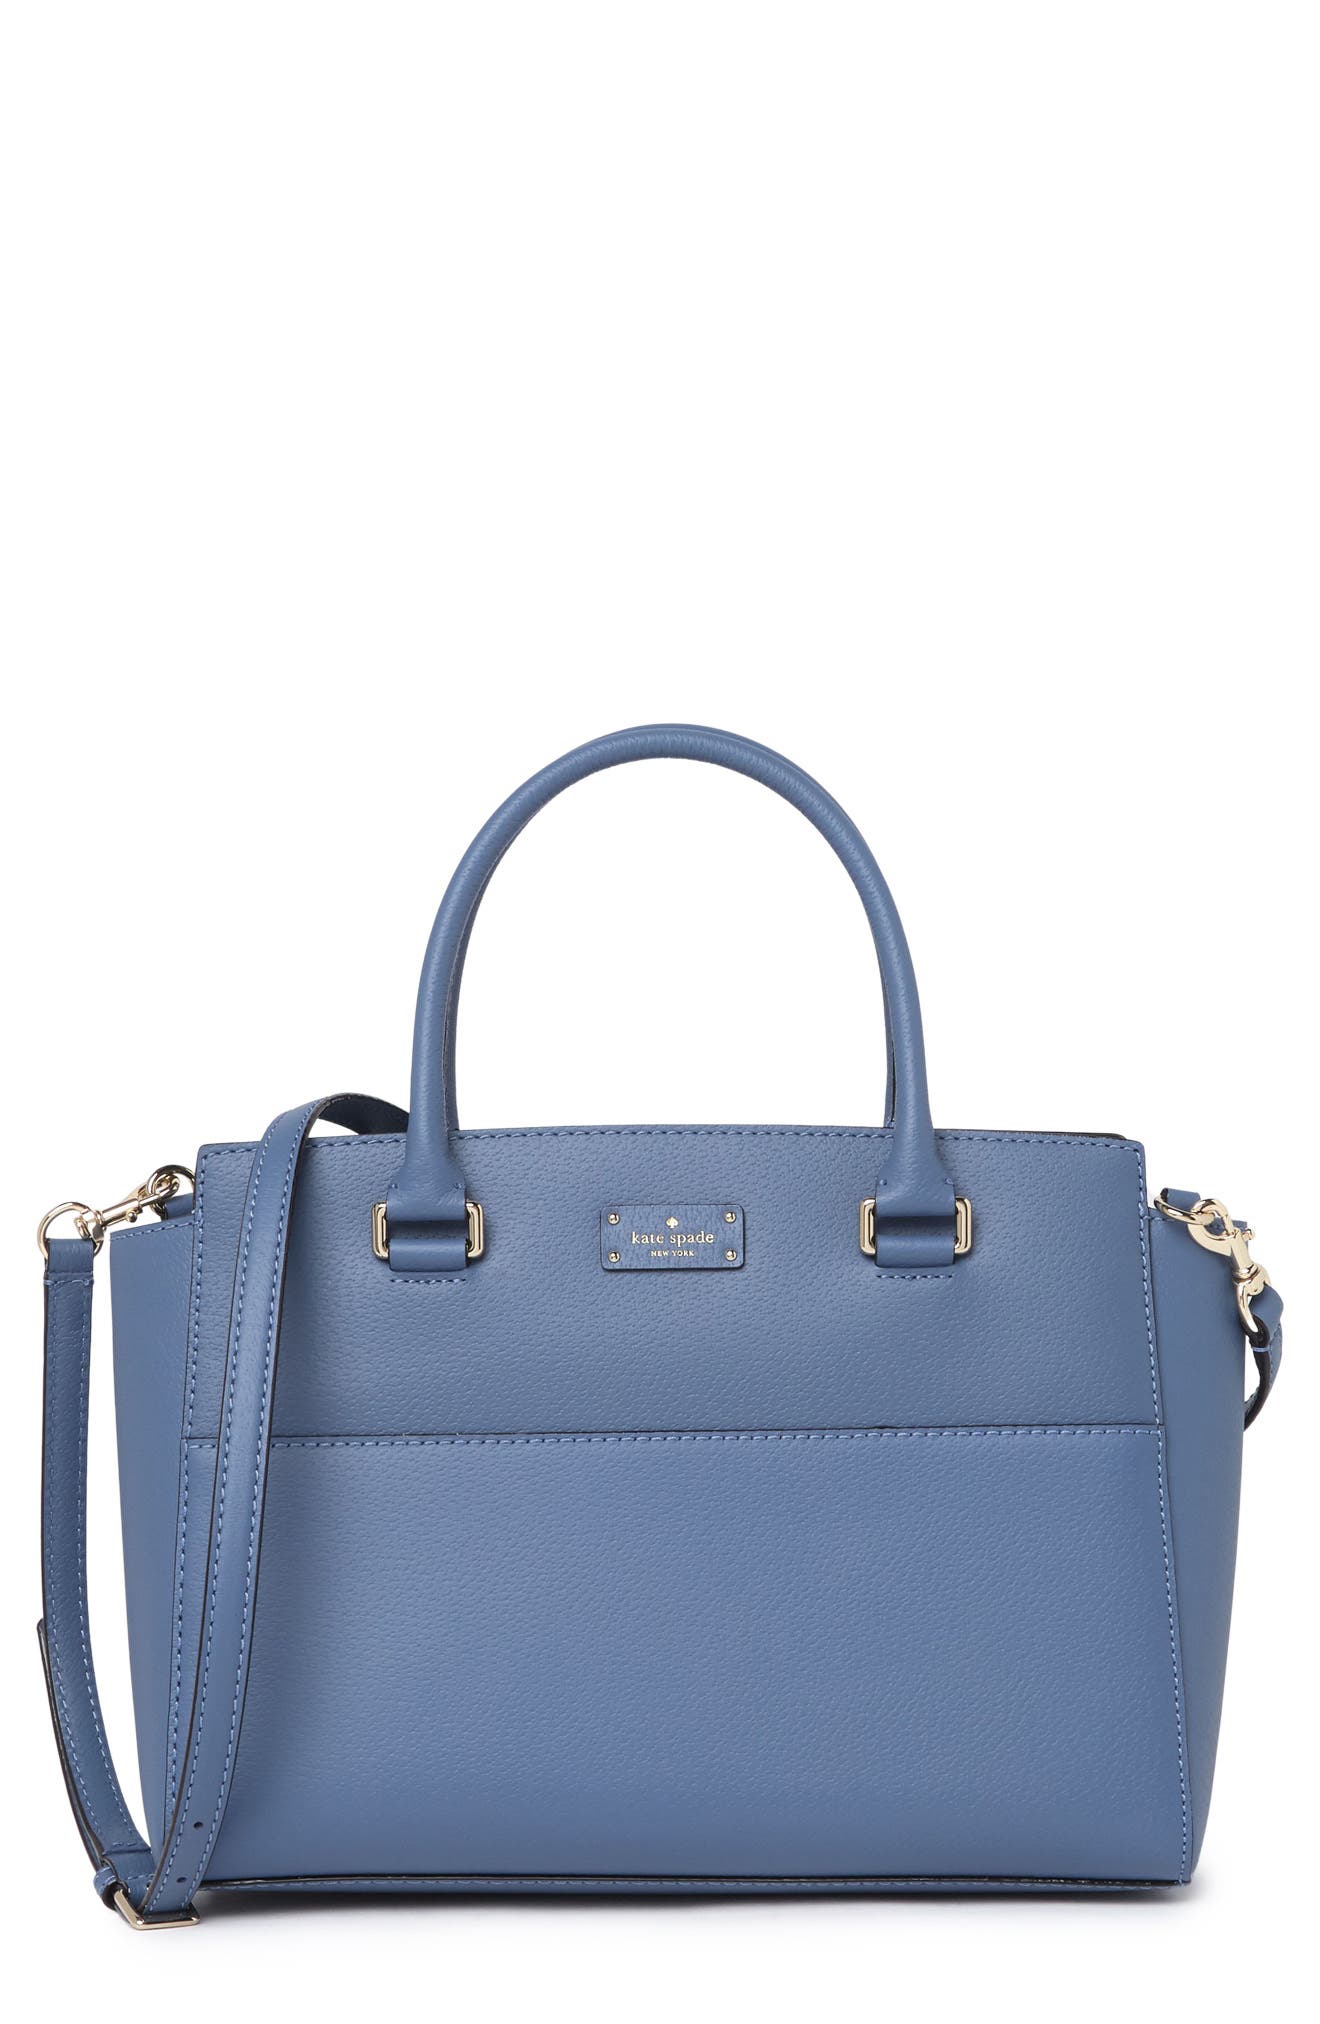 Kate Spade Lana Leather Satchel Bag In Constellation Blue